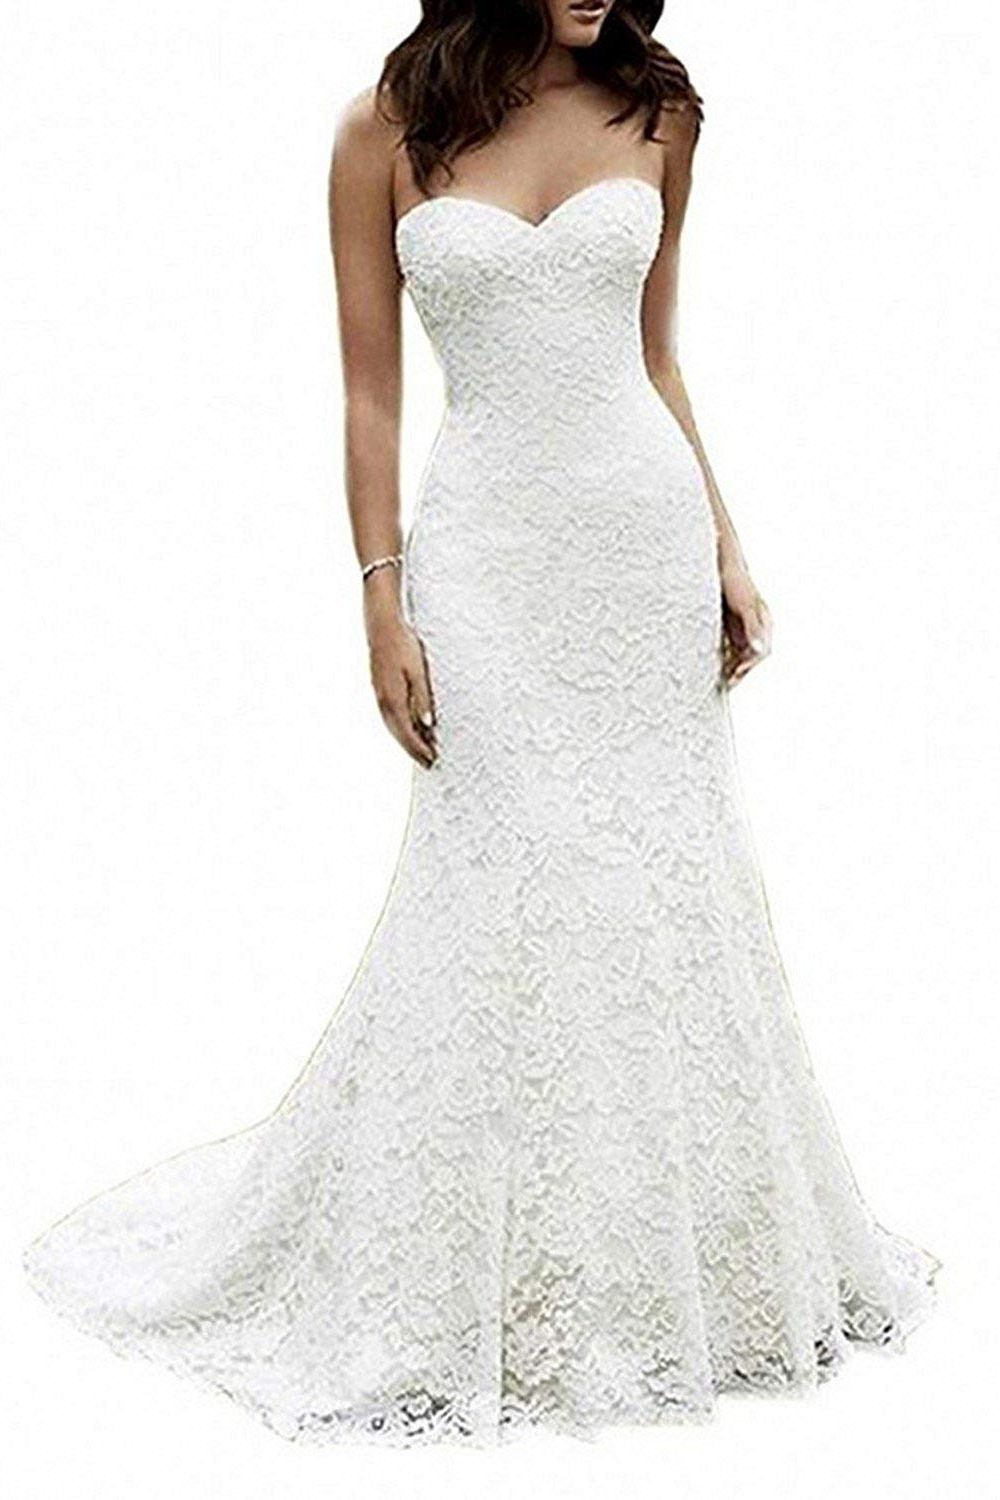 8 Amazon Wedding Dresses Under $150 ...